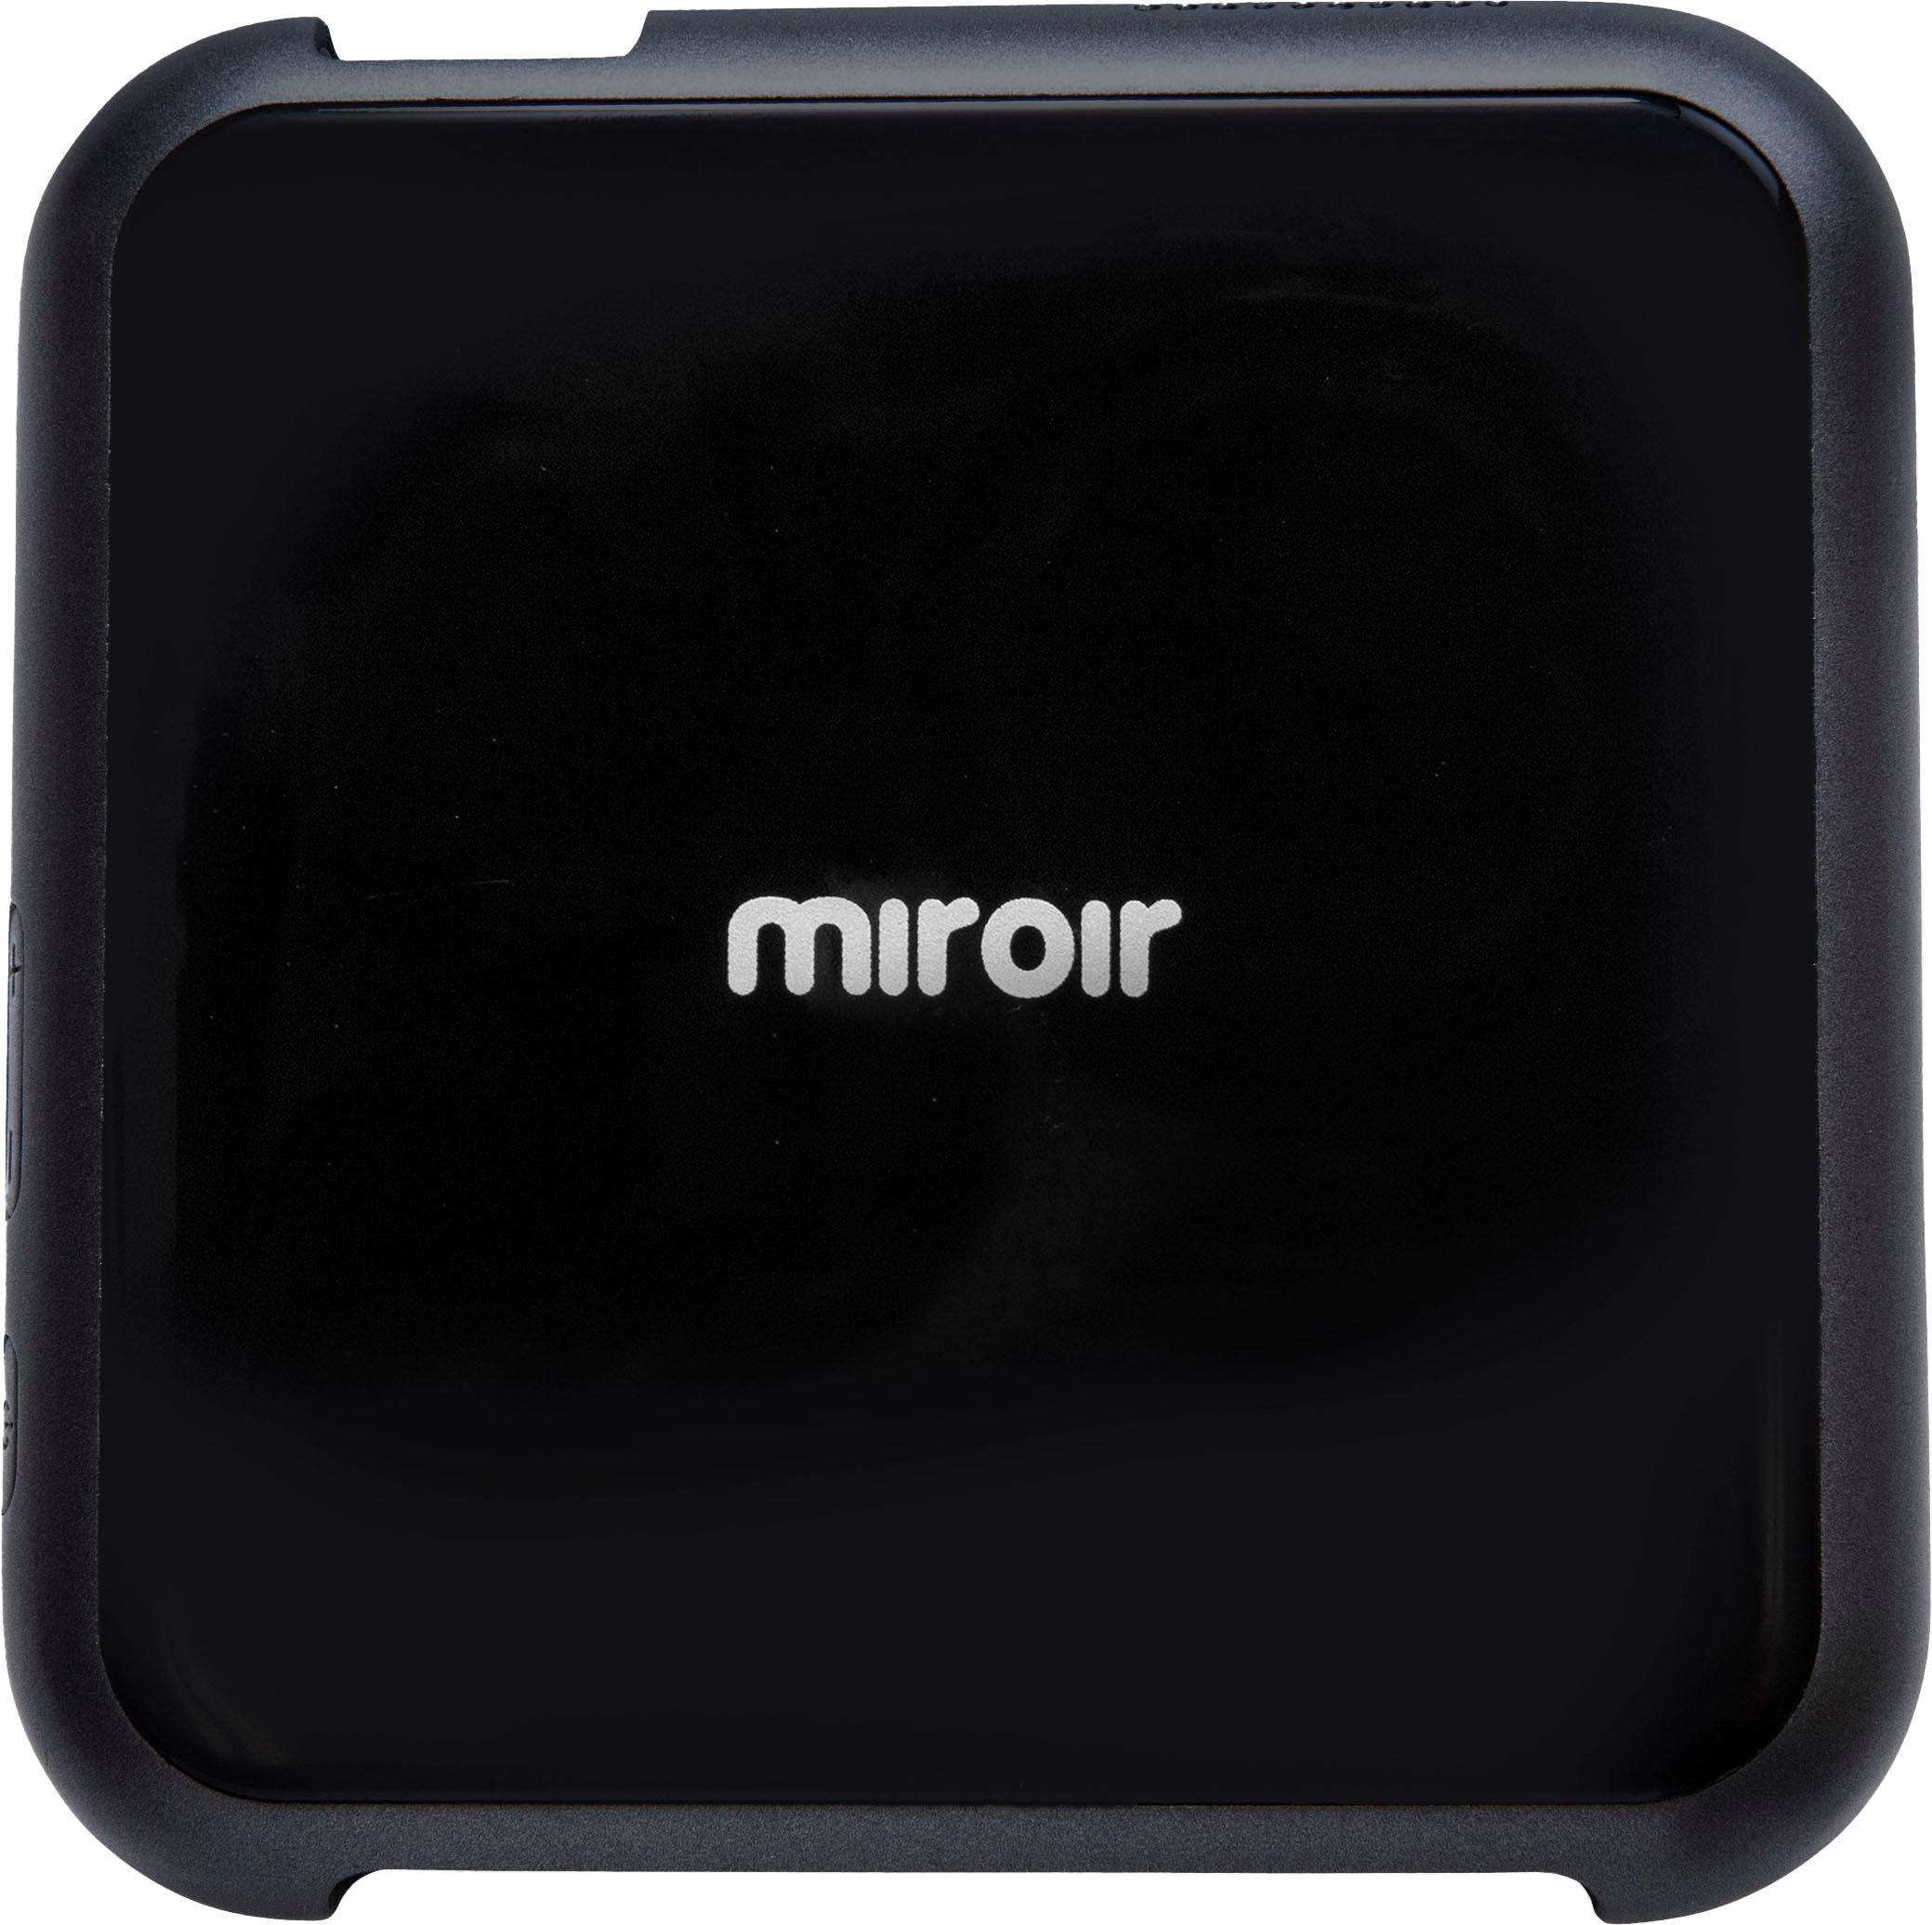 Miroir - M76 Wireless Projector - Black